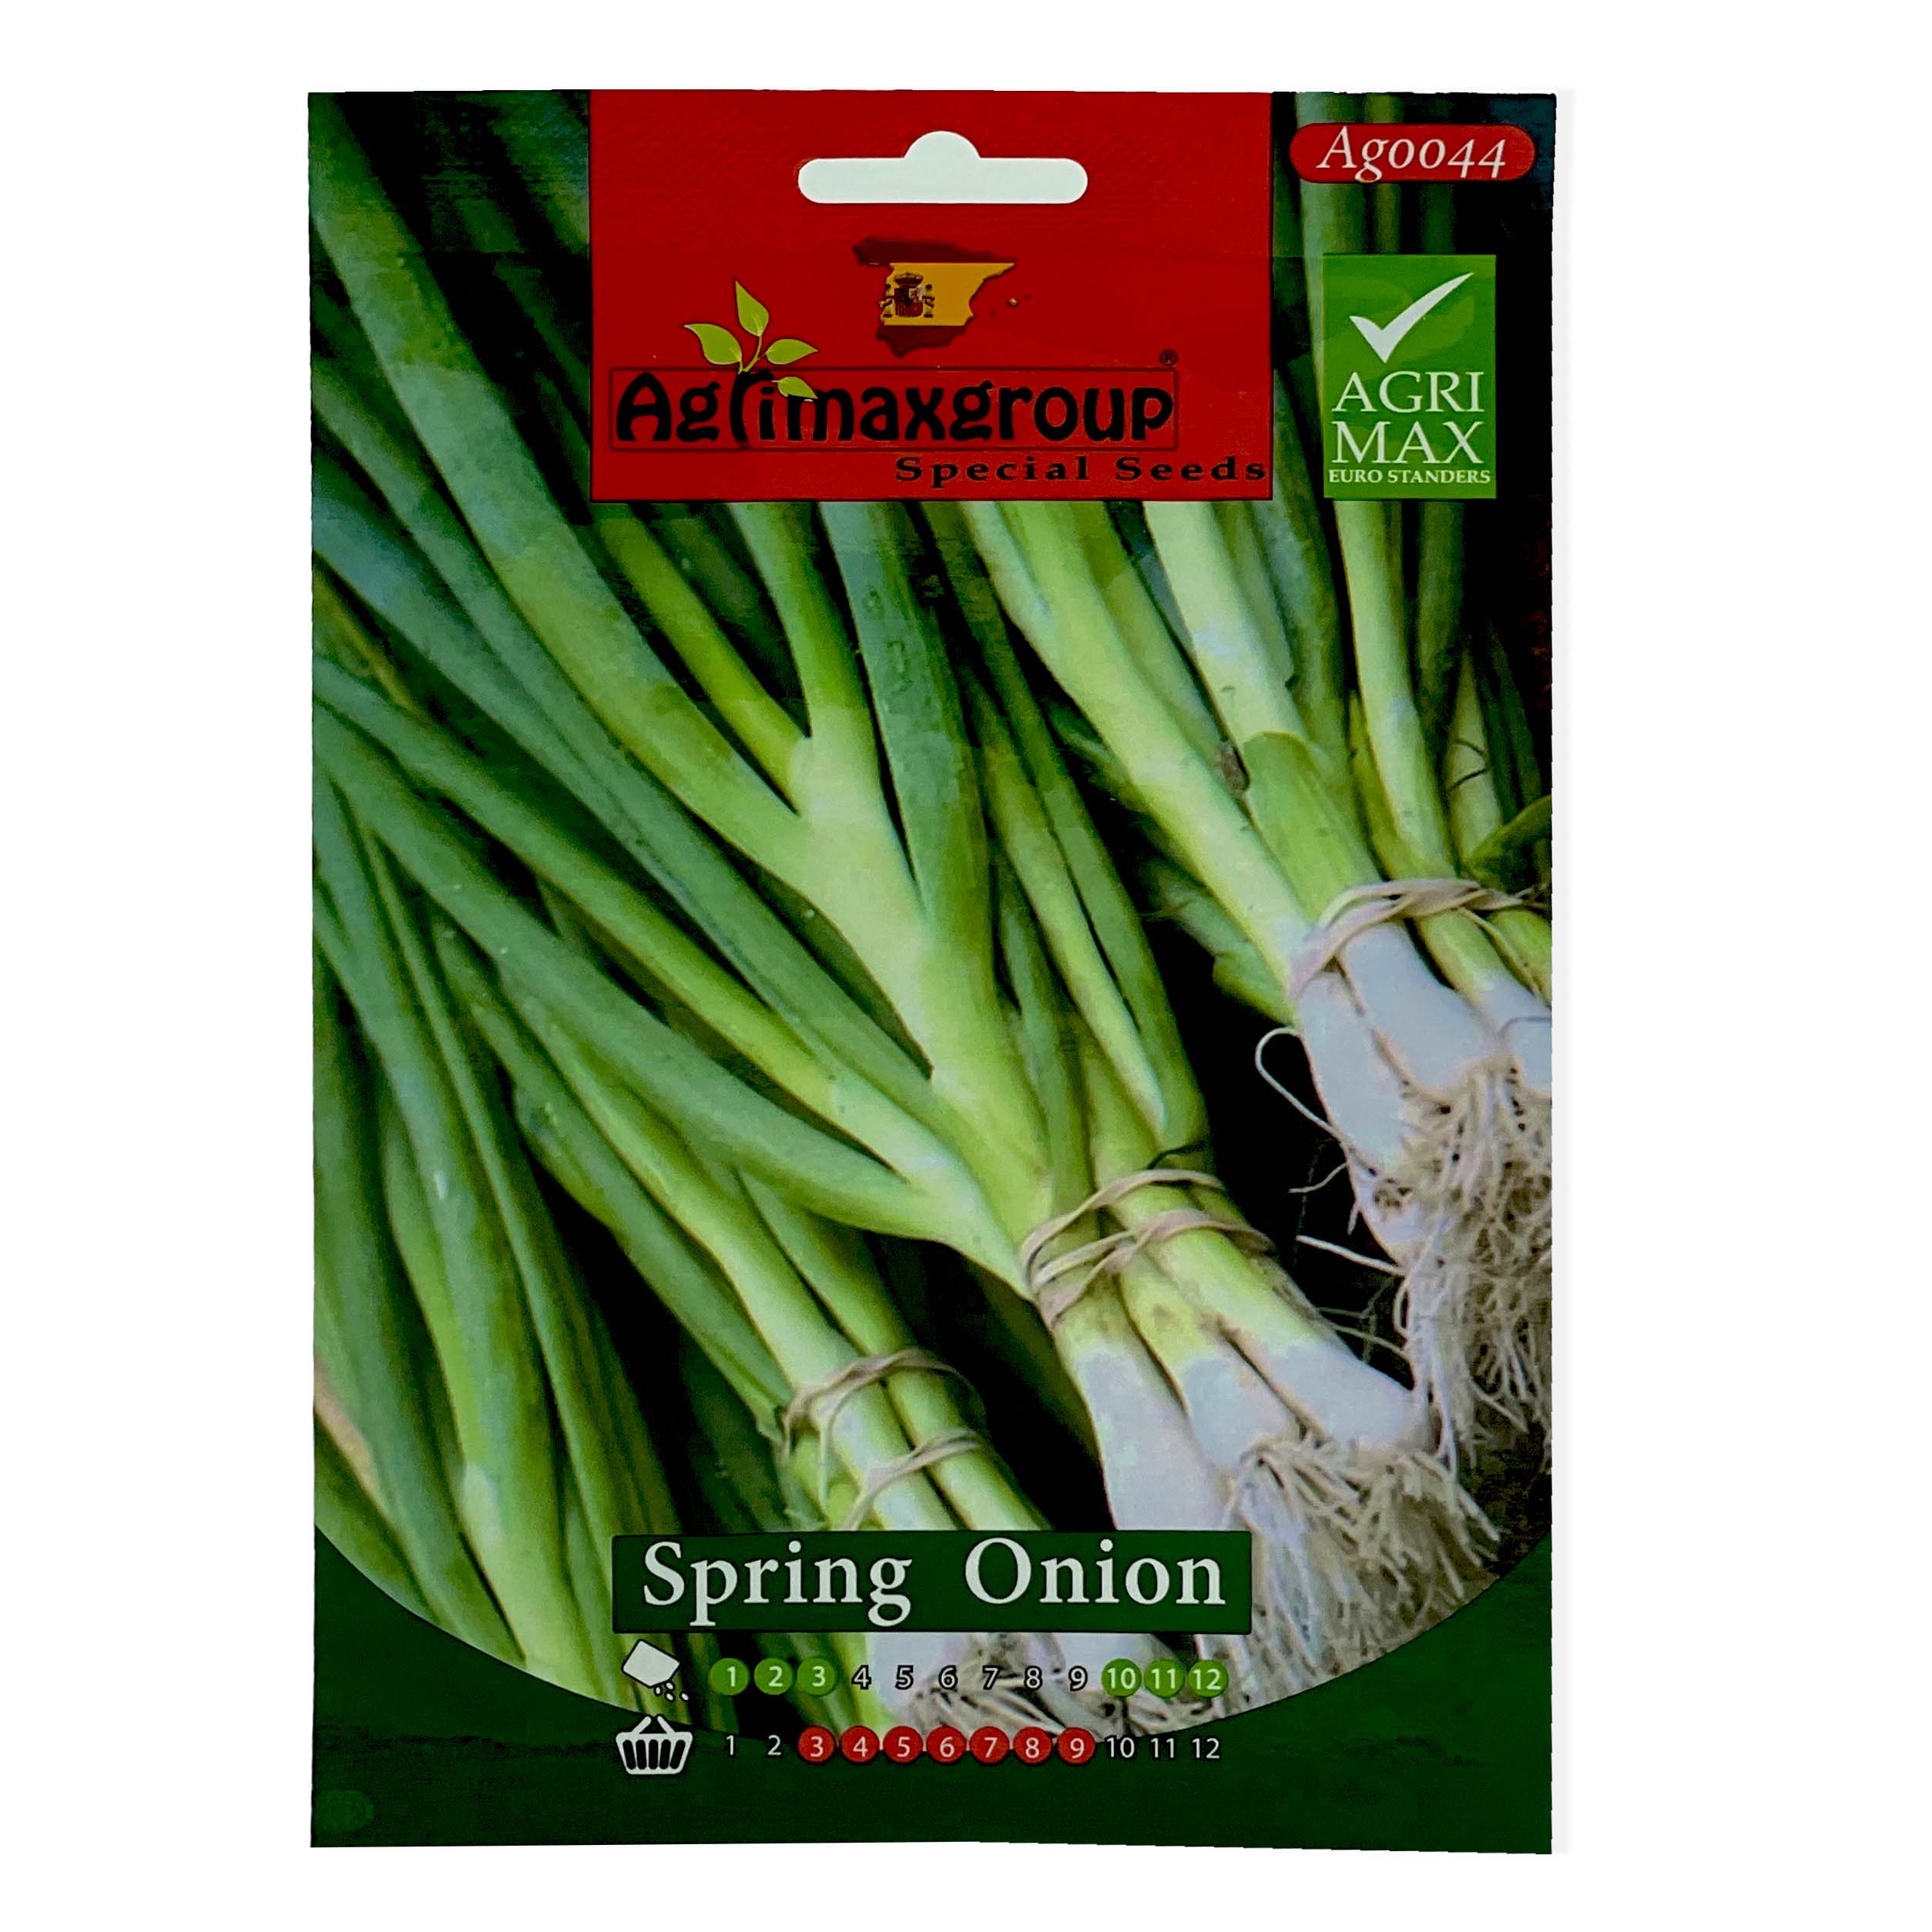 Scallion Seeds, Green Onion Seeds, Spring Onion Seeds